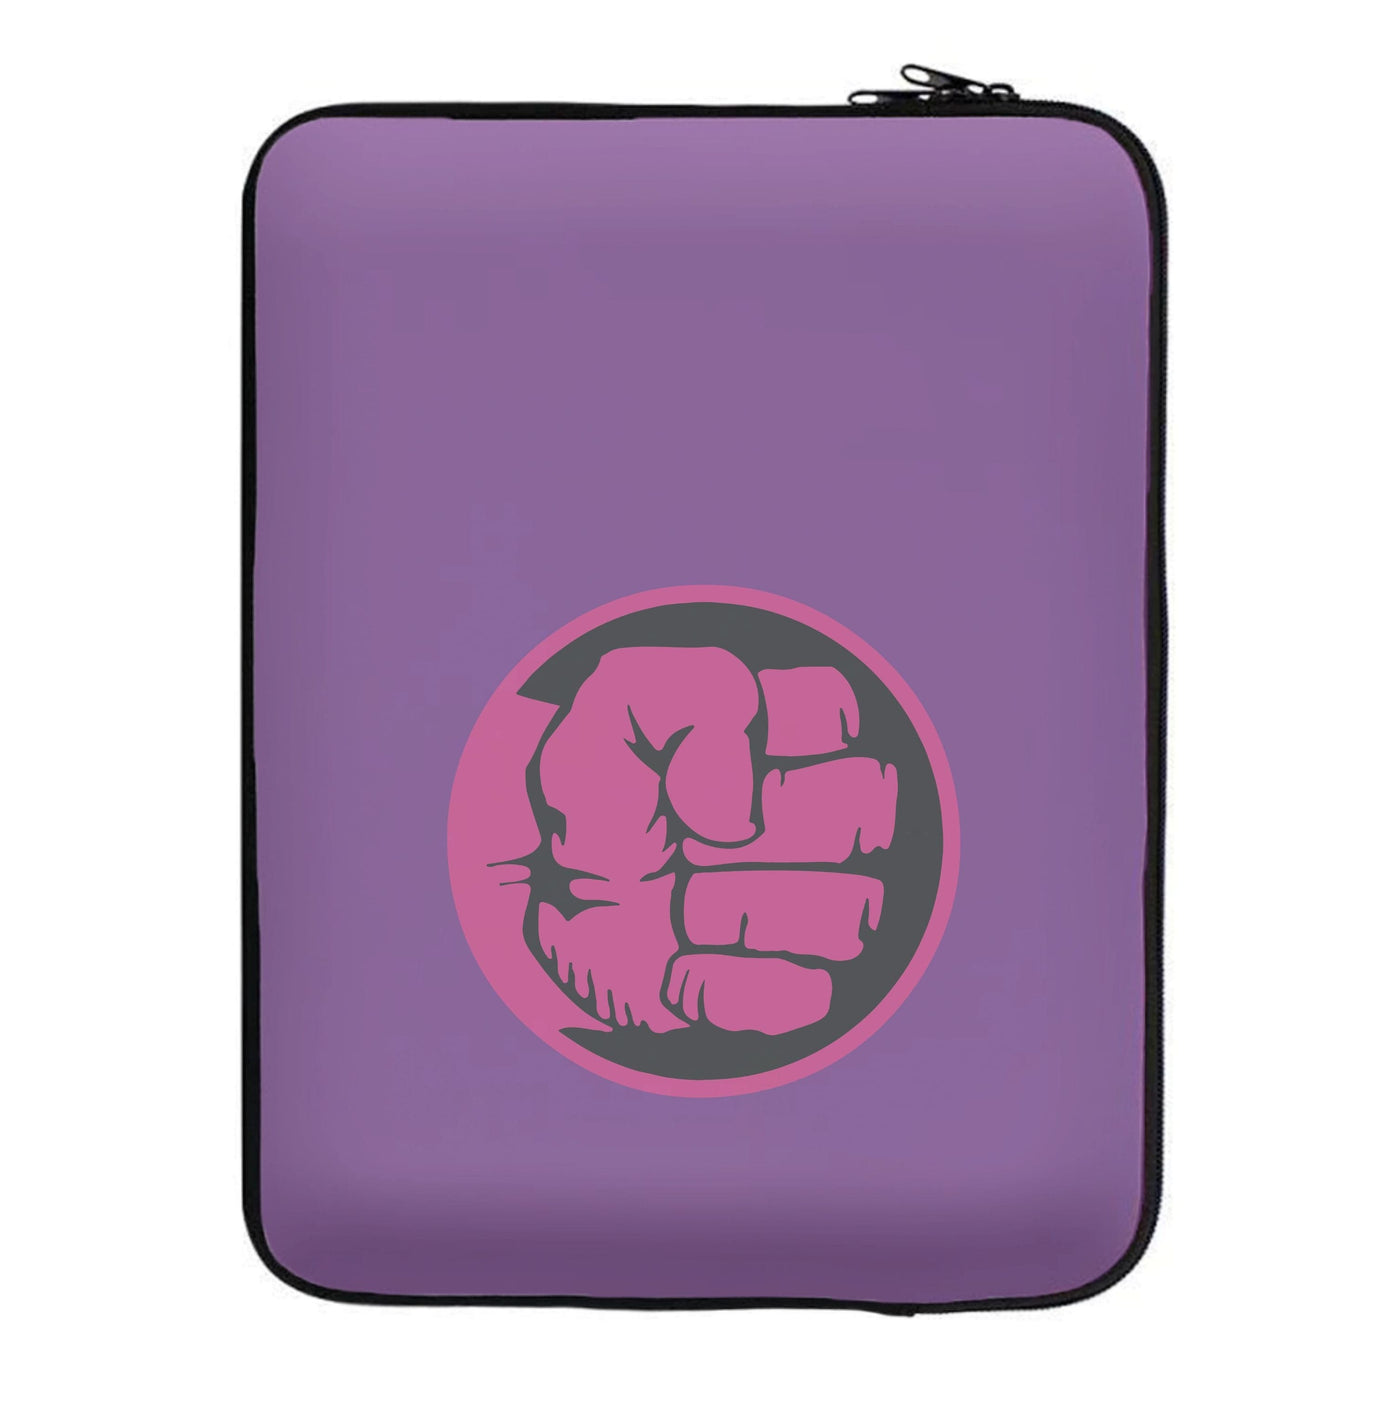 Fist - She Hulk Laptop Sleeve